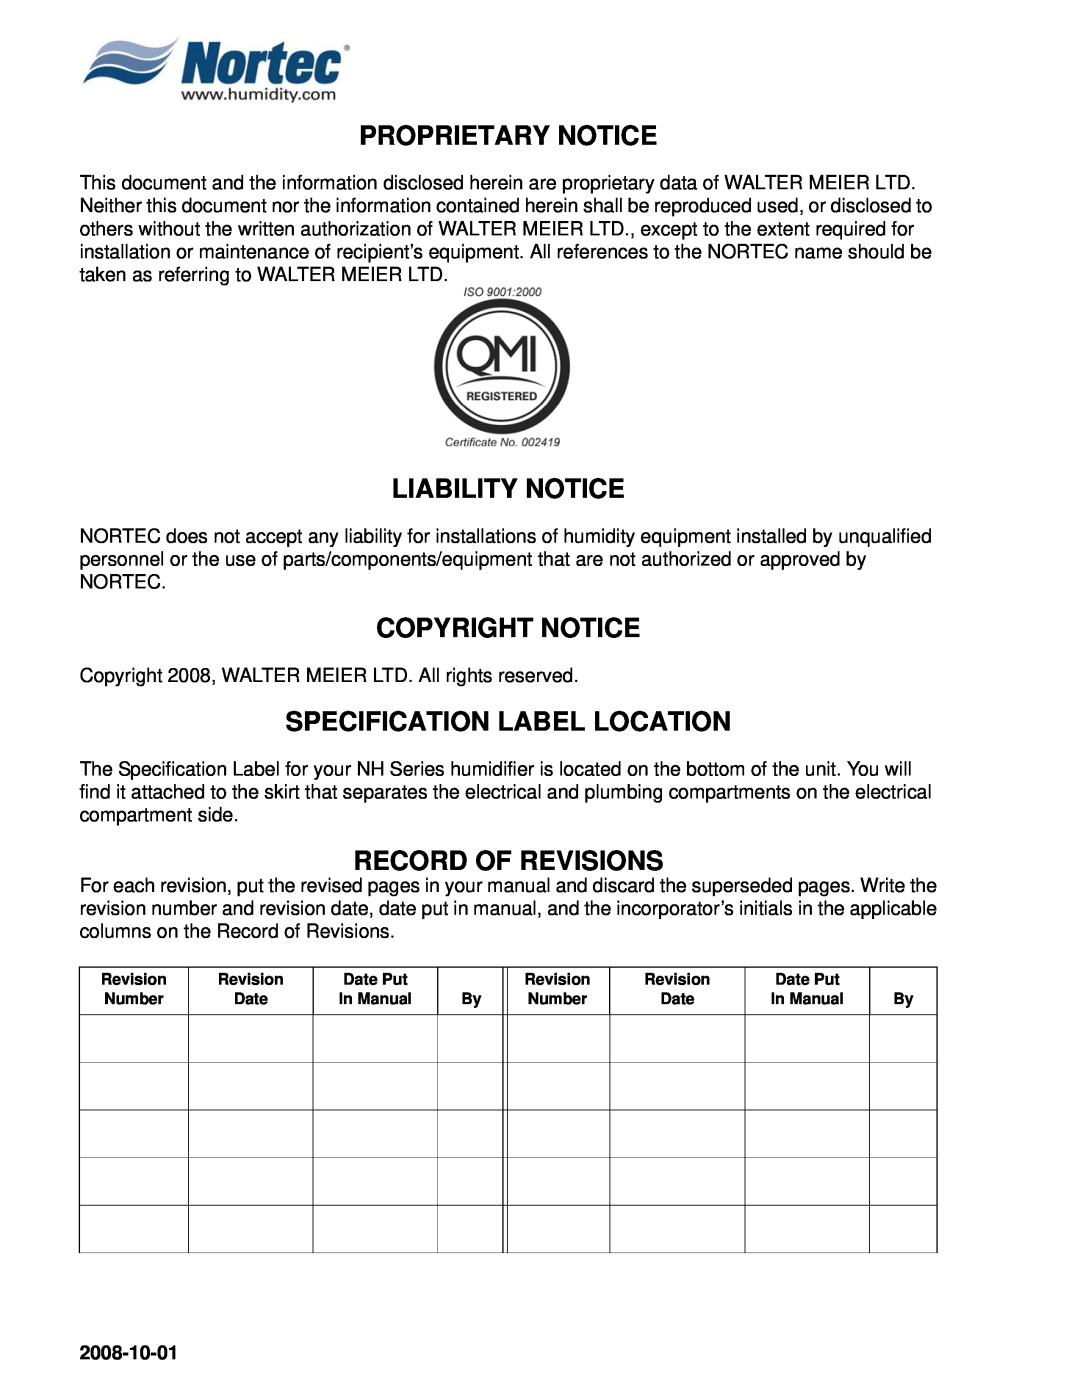 Nortec NHPC Proprietary Notice, Liability Notice, Copyright Notice, Specification Label Location, Record Of Revisions 